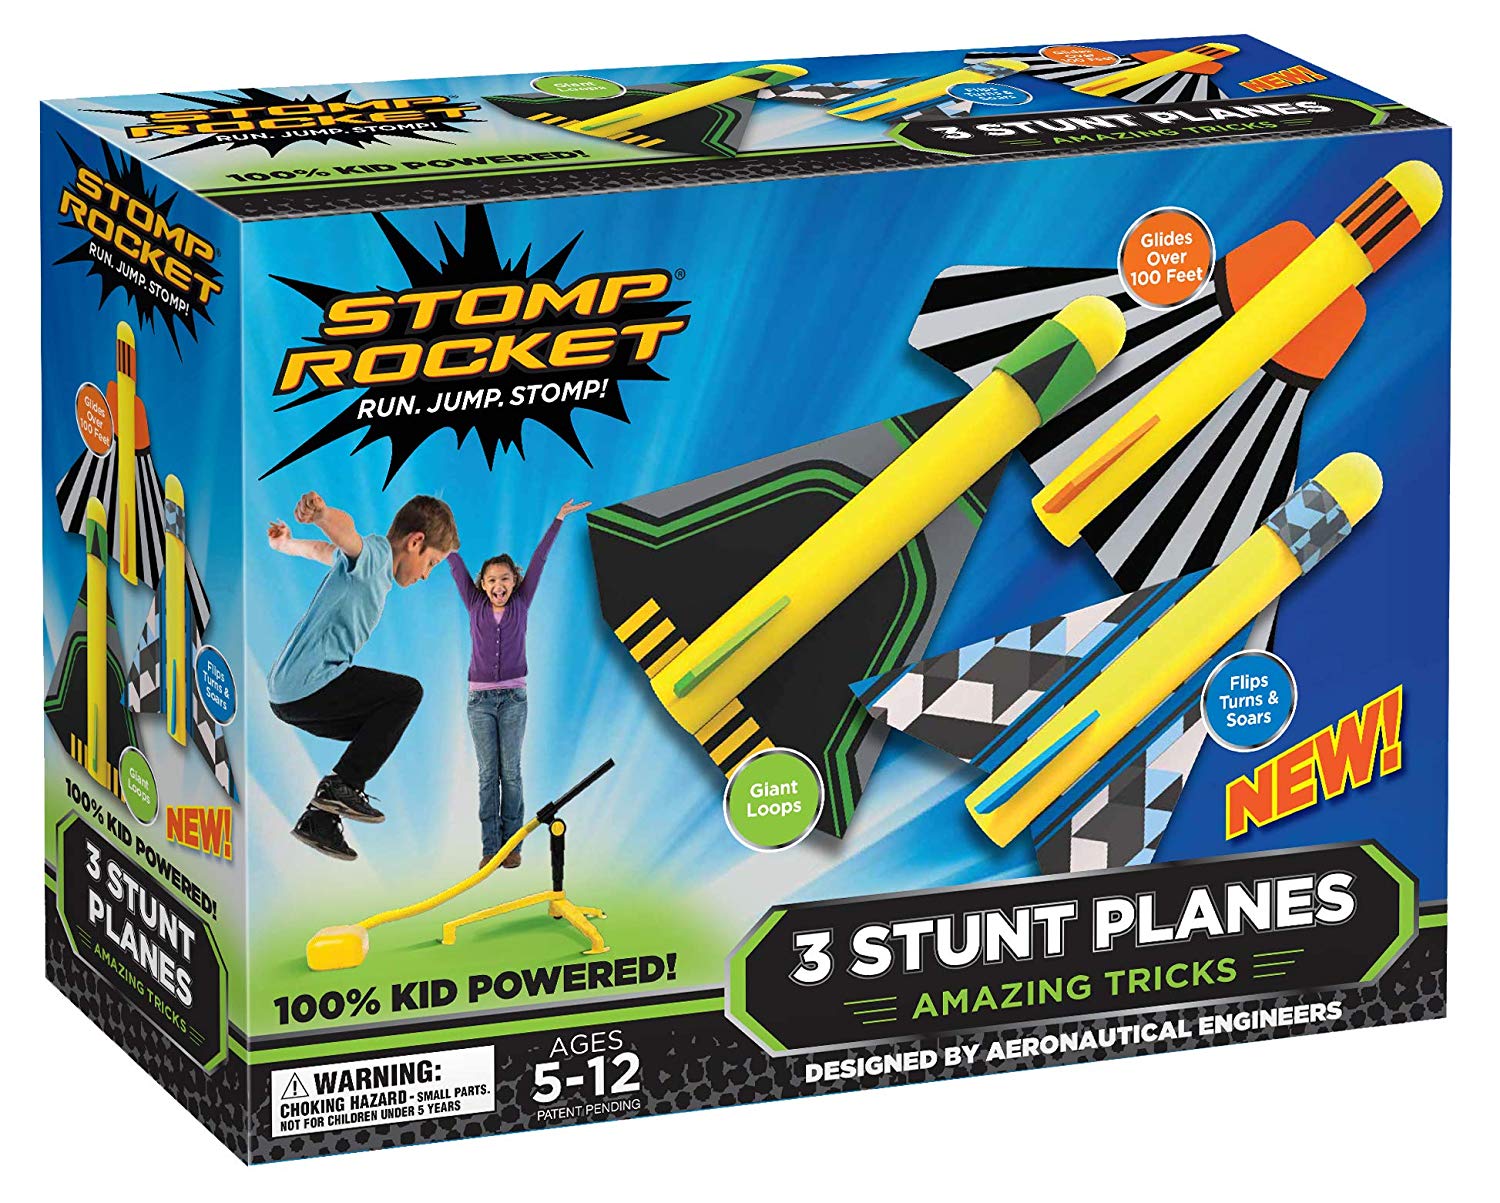 Stunt Planes Air Pressure Rocket